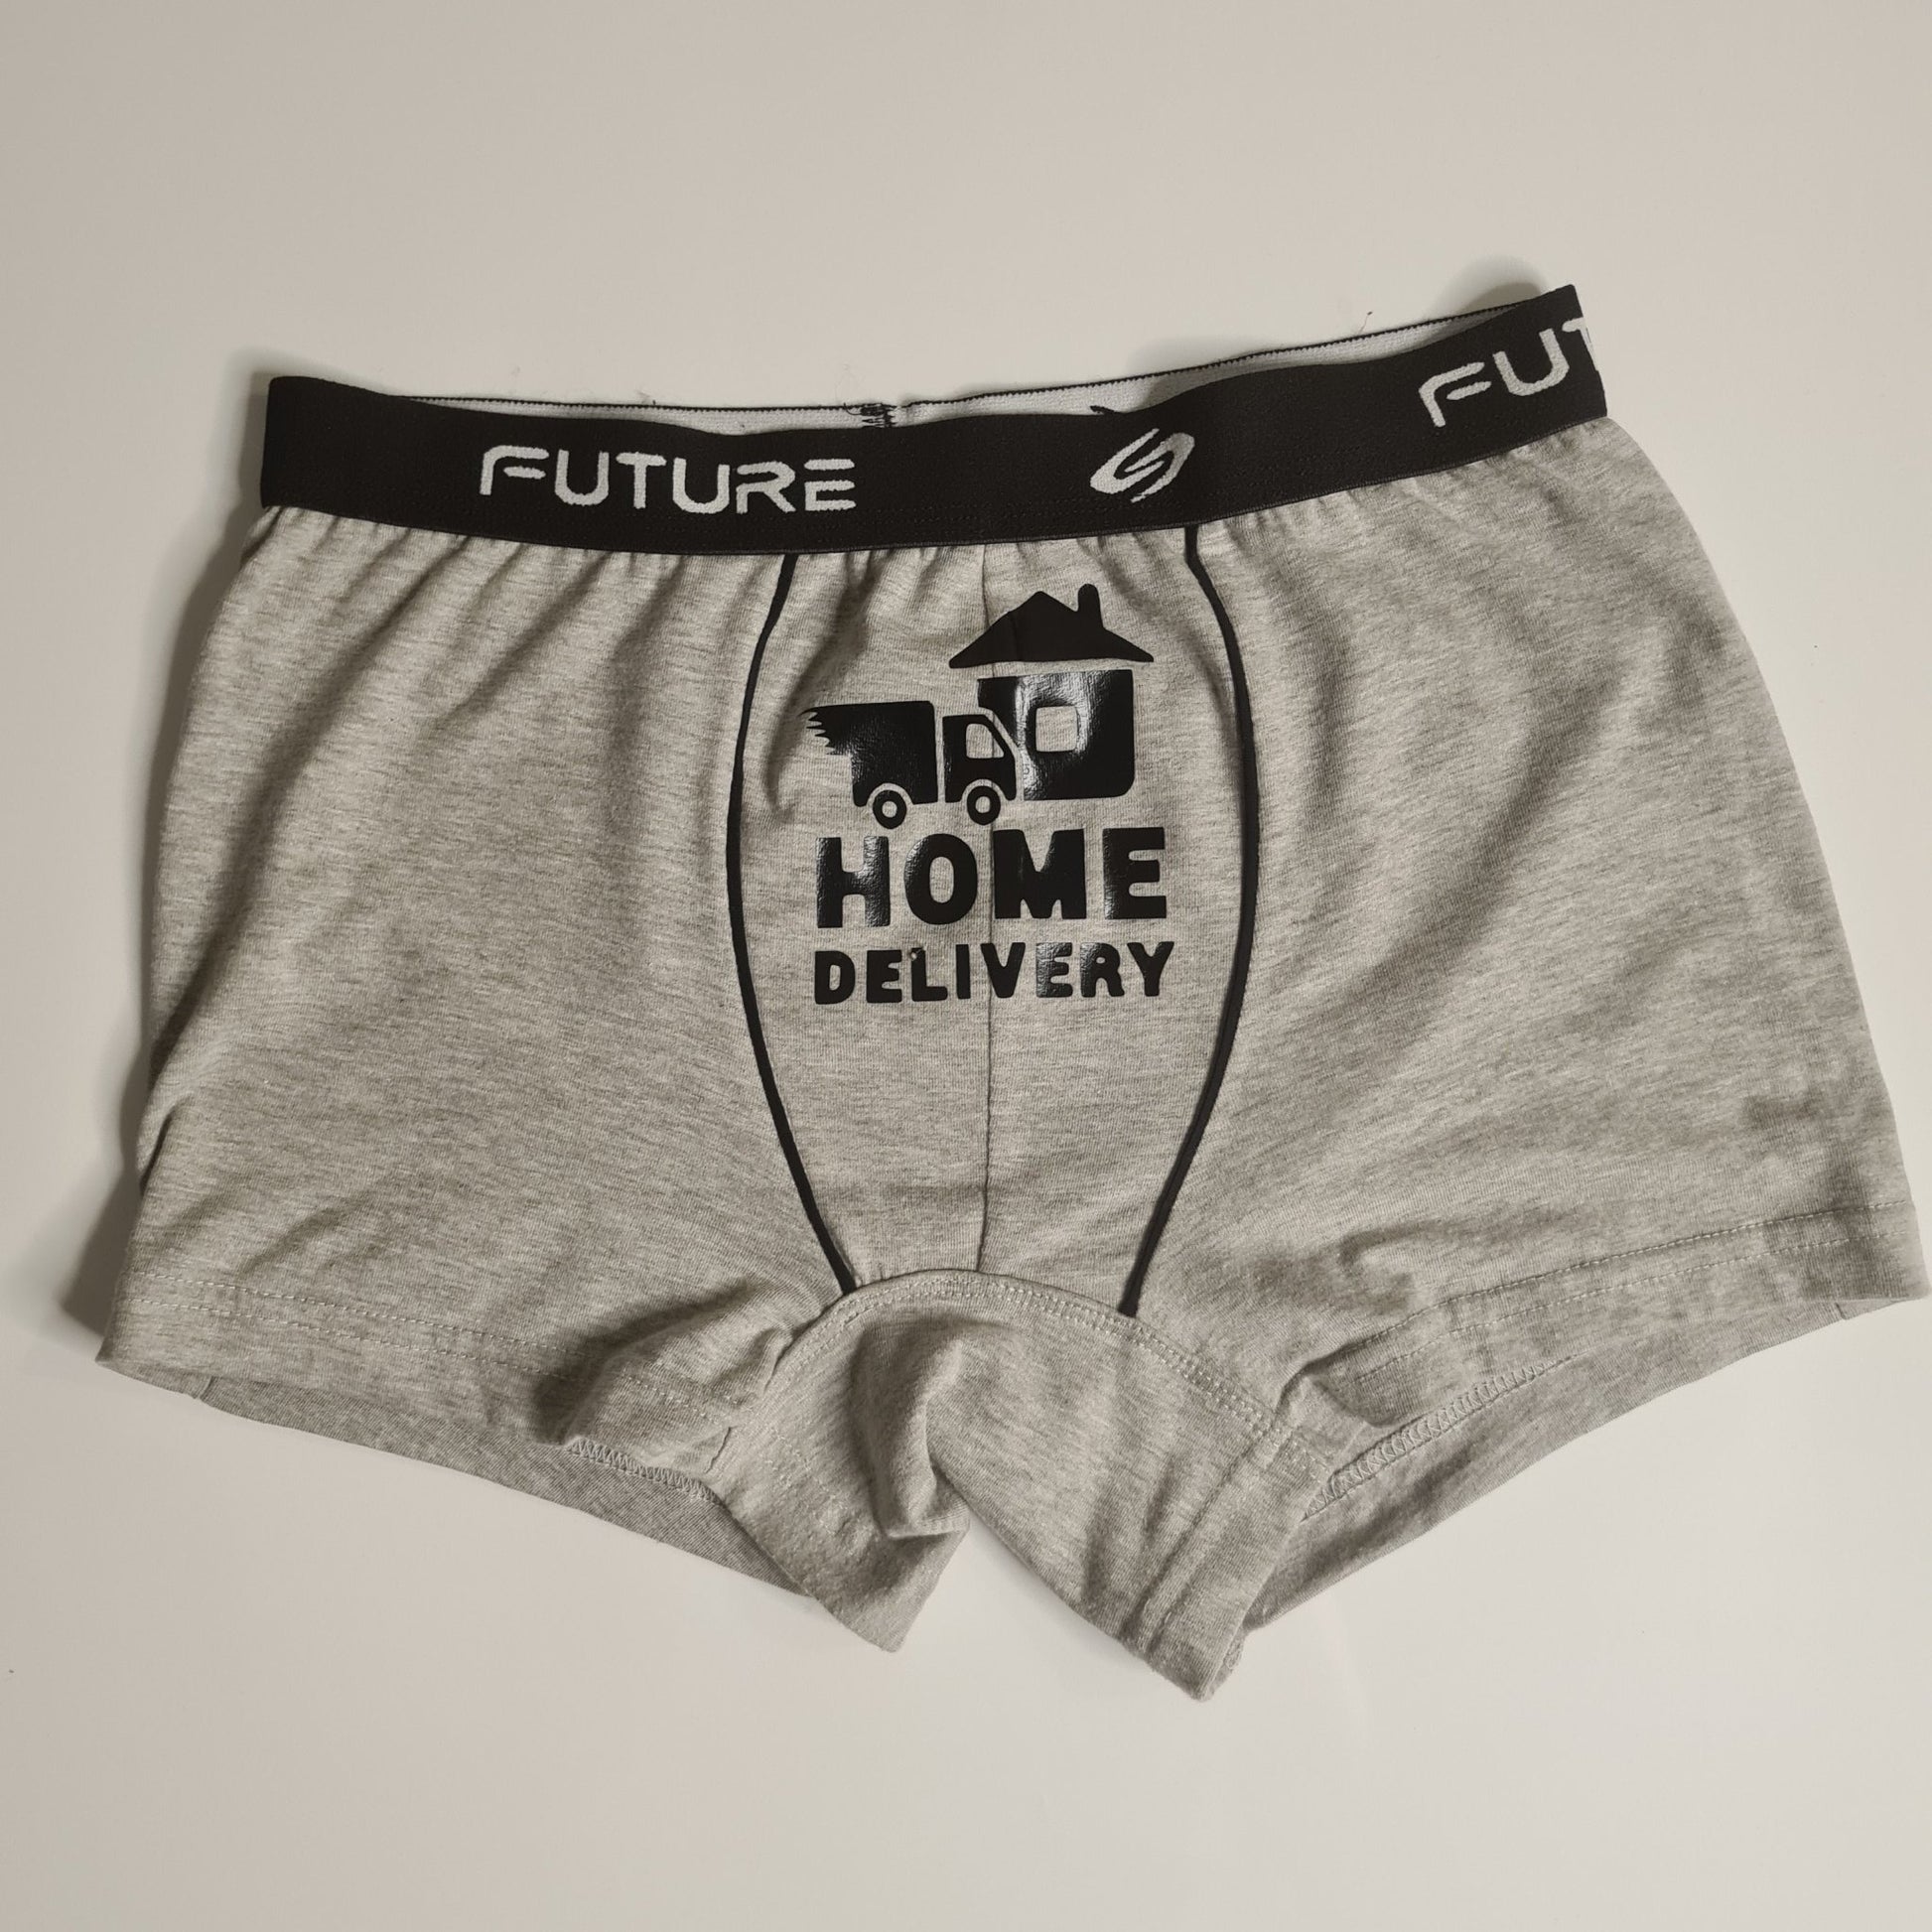 Men Underwear - Home Delivery - Etba3lly